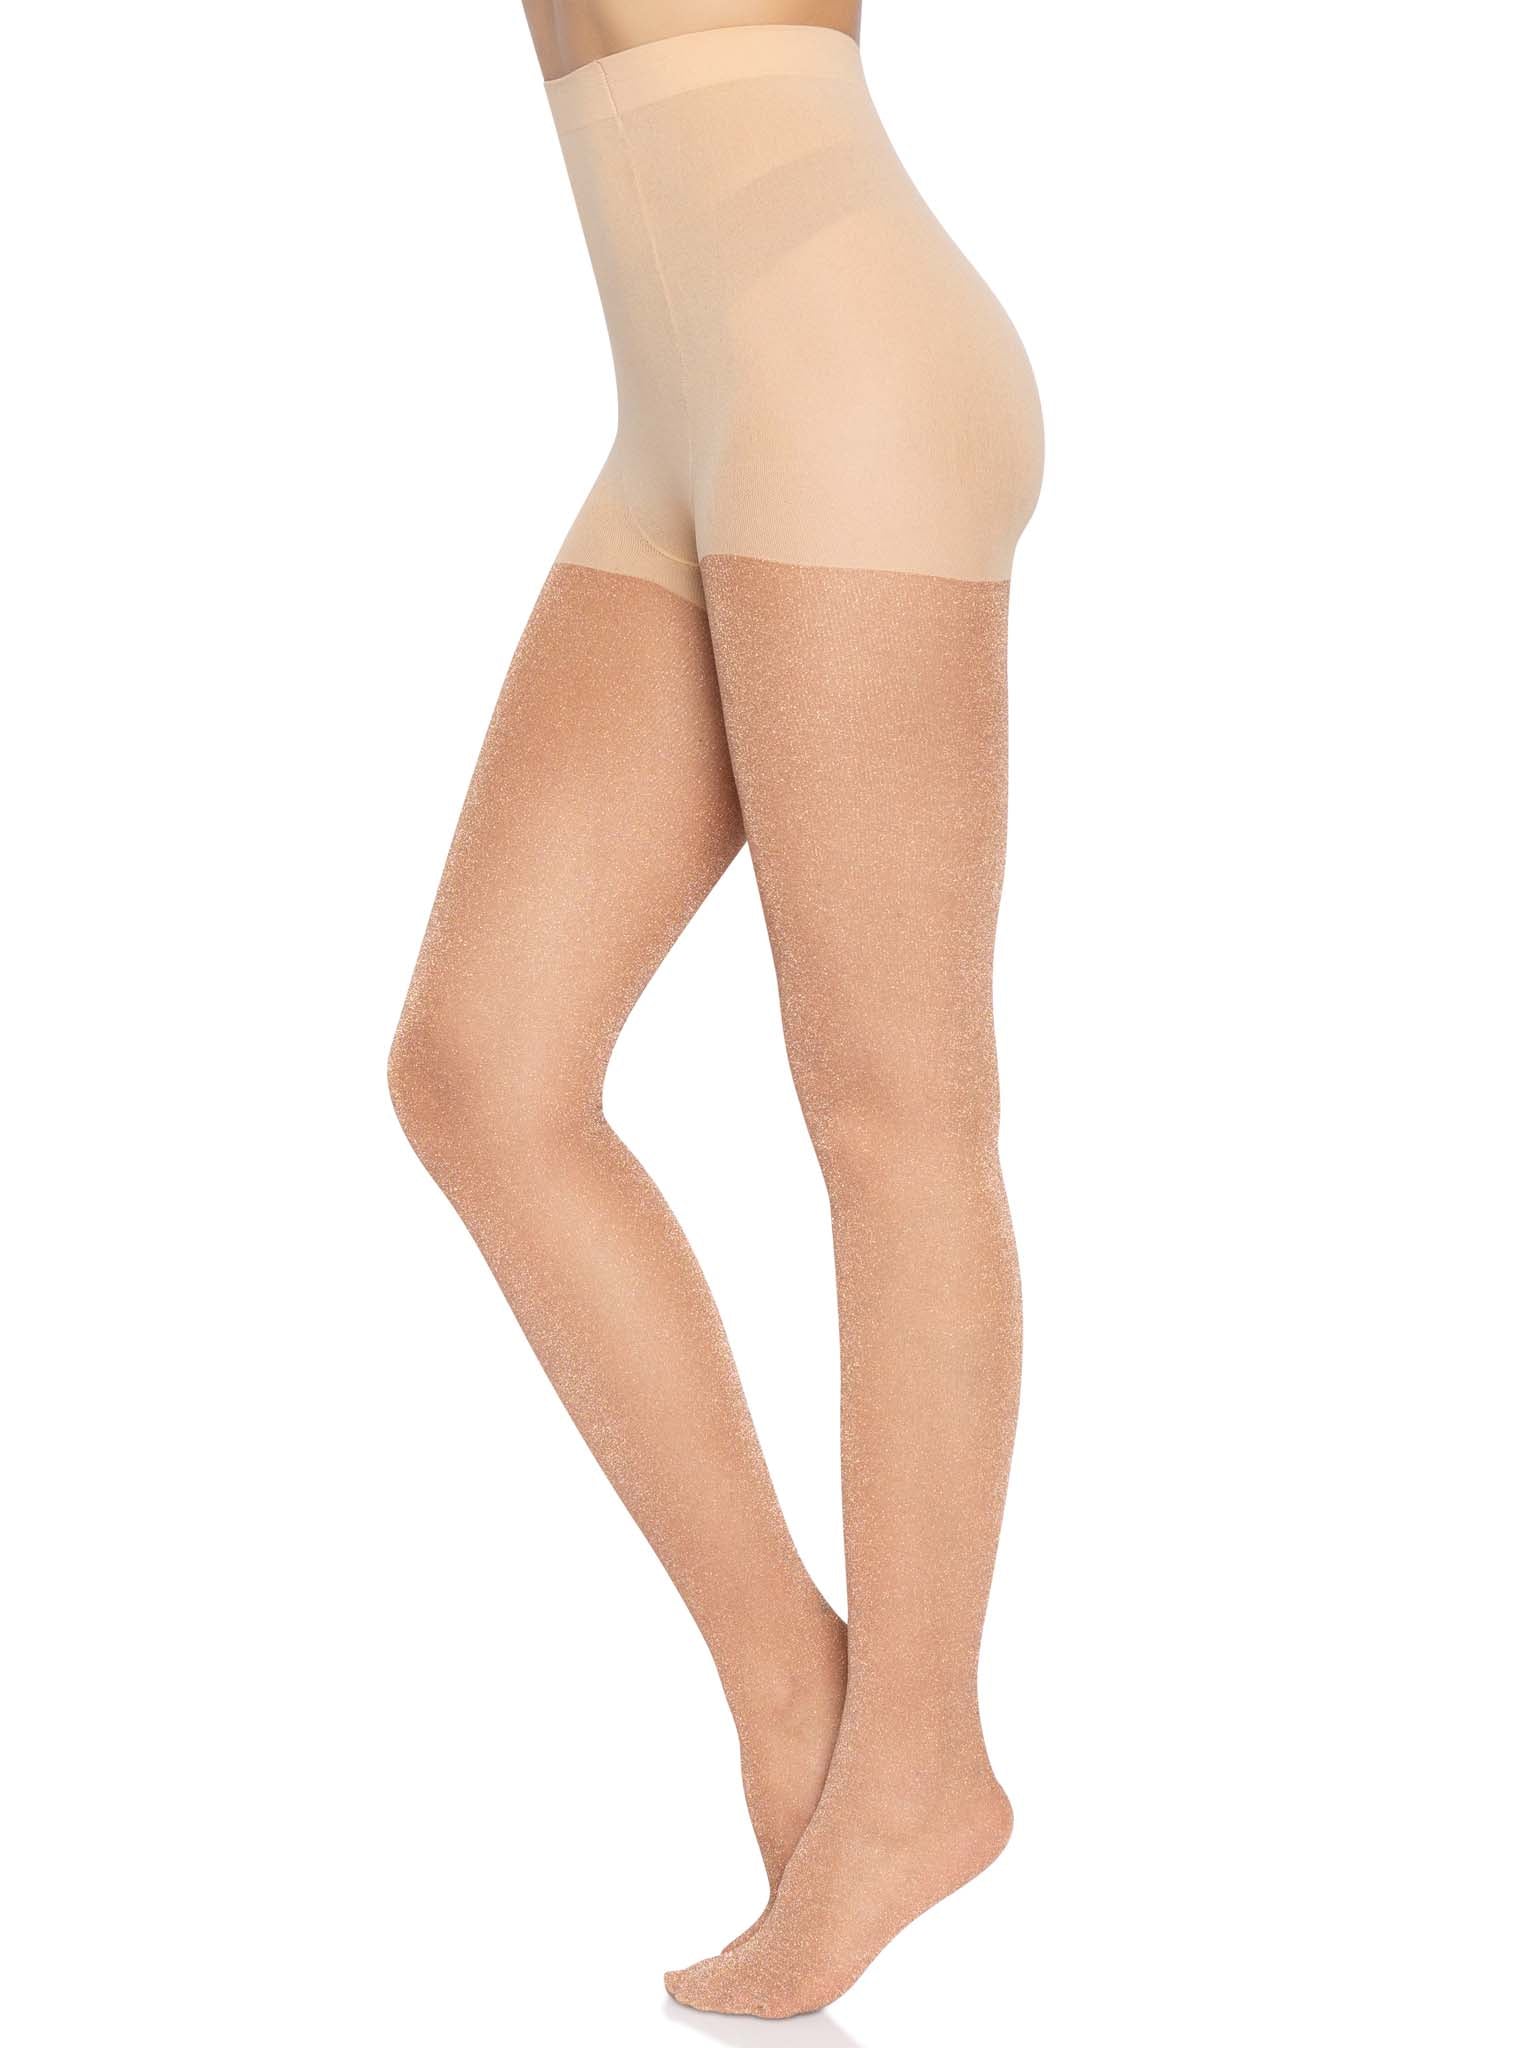 Sansha Shimmery tights T92 color Creme size M